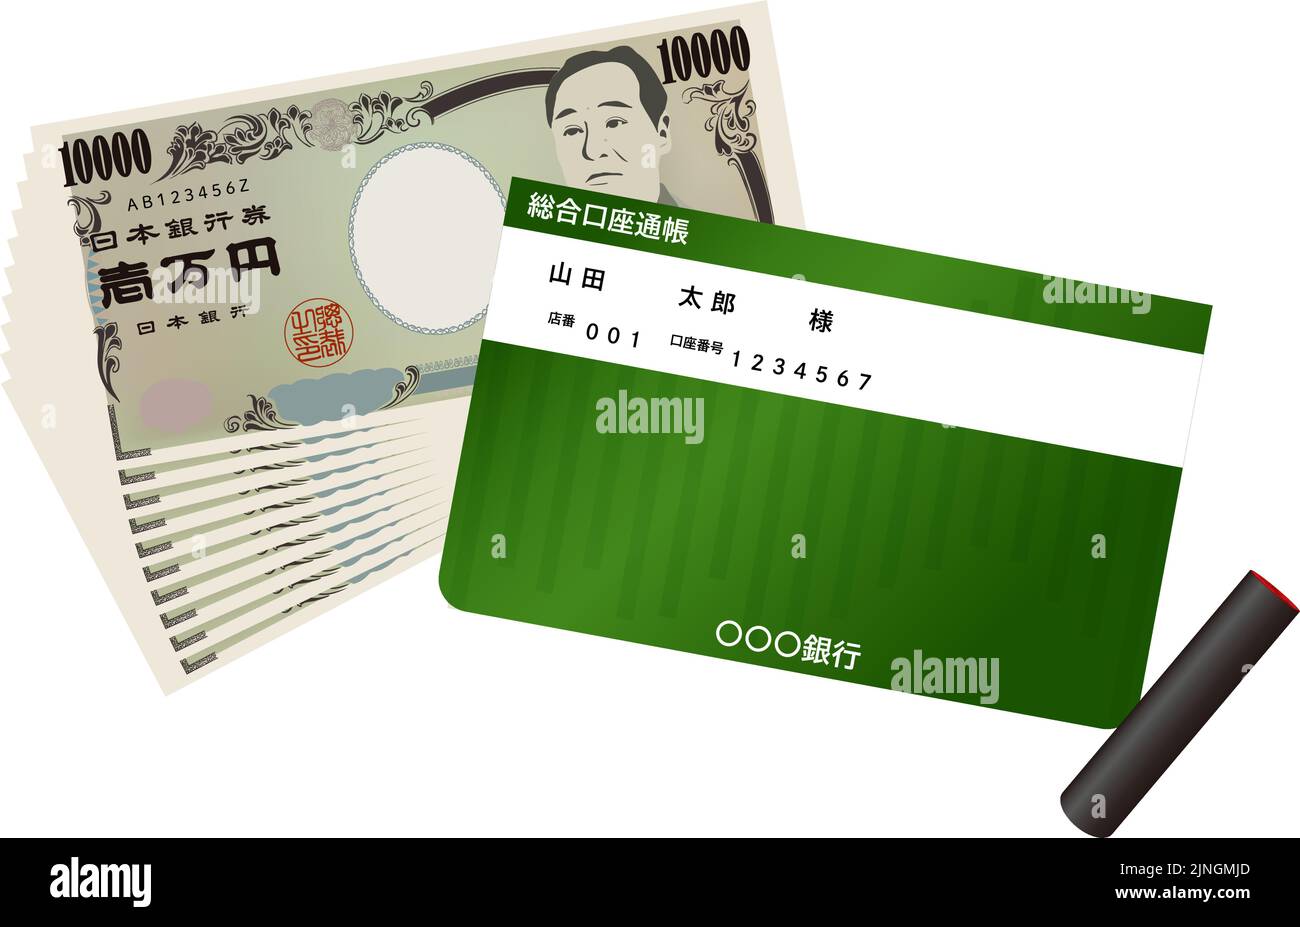 Illustration of 100,000 yen cash and bank passbook and seal  Translation: Bank of Japan ticket, 10,000 yen, Bank of Japan, Mr. Taro Yamada, store numb Stock Vector